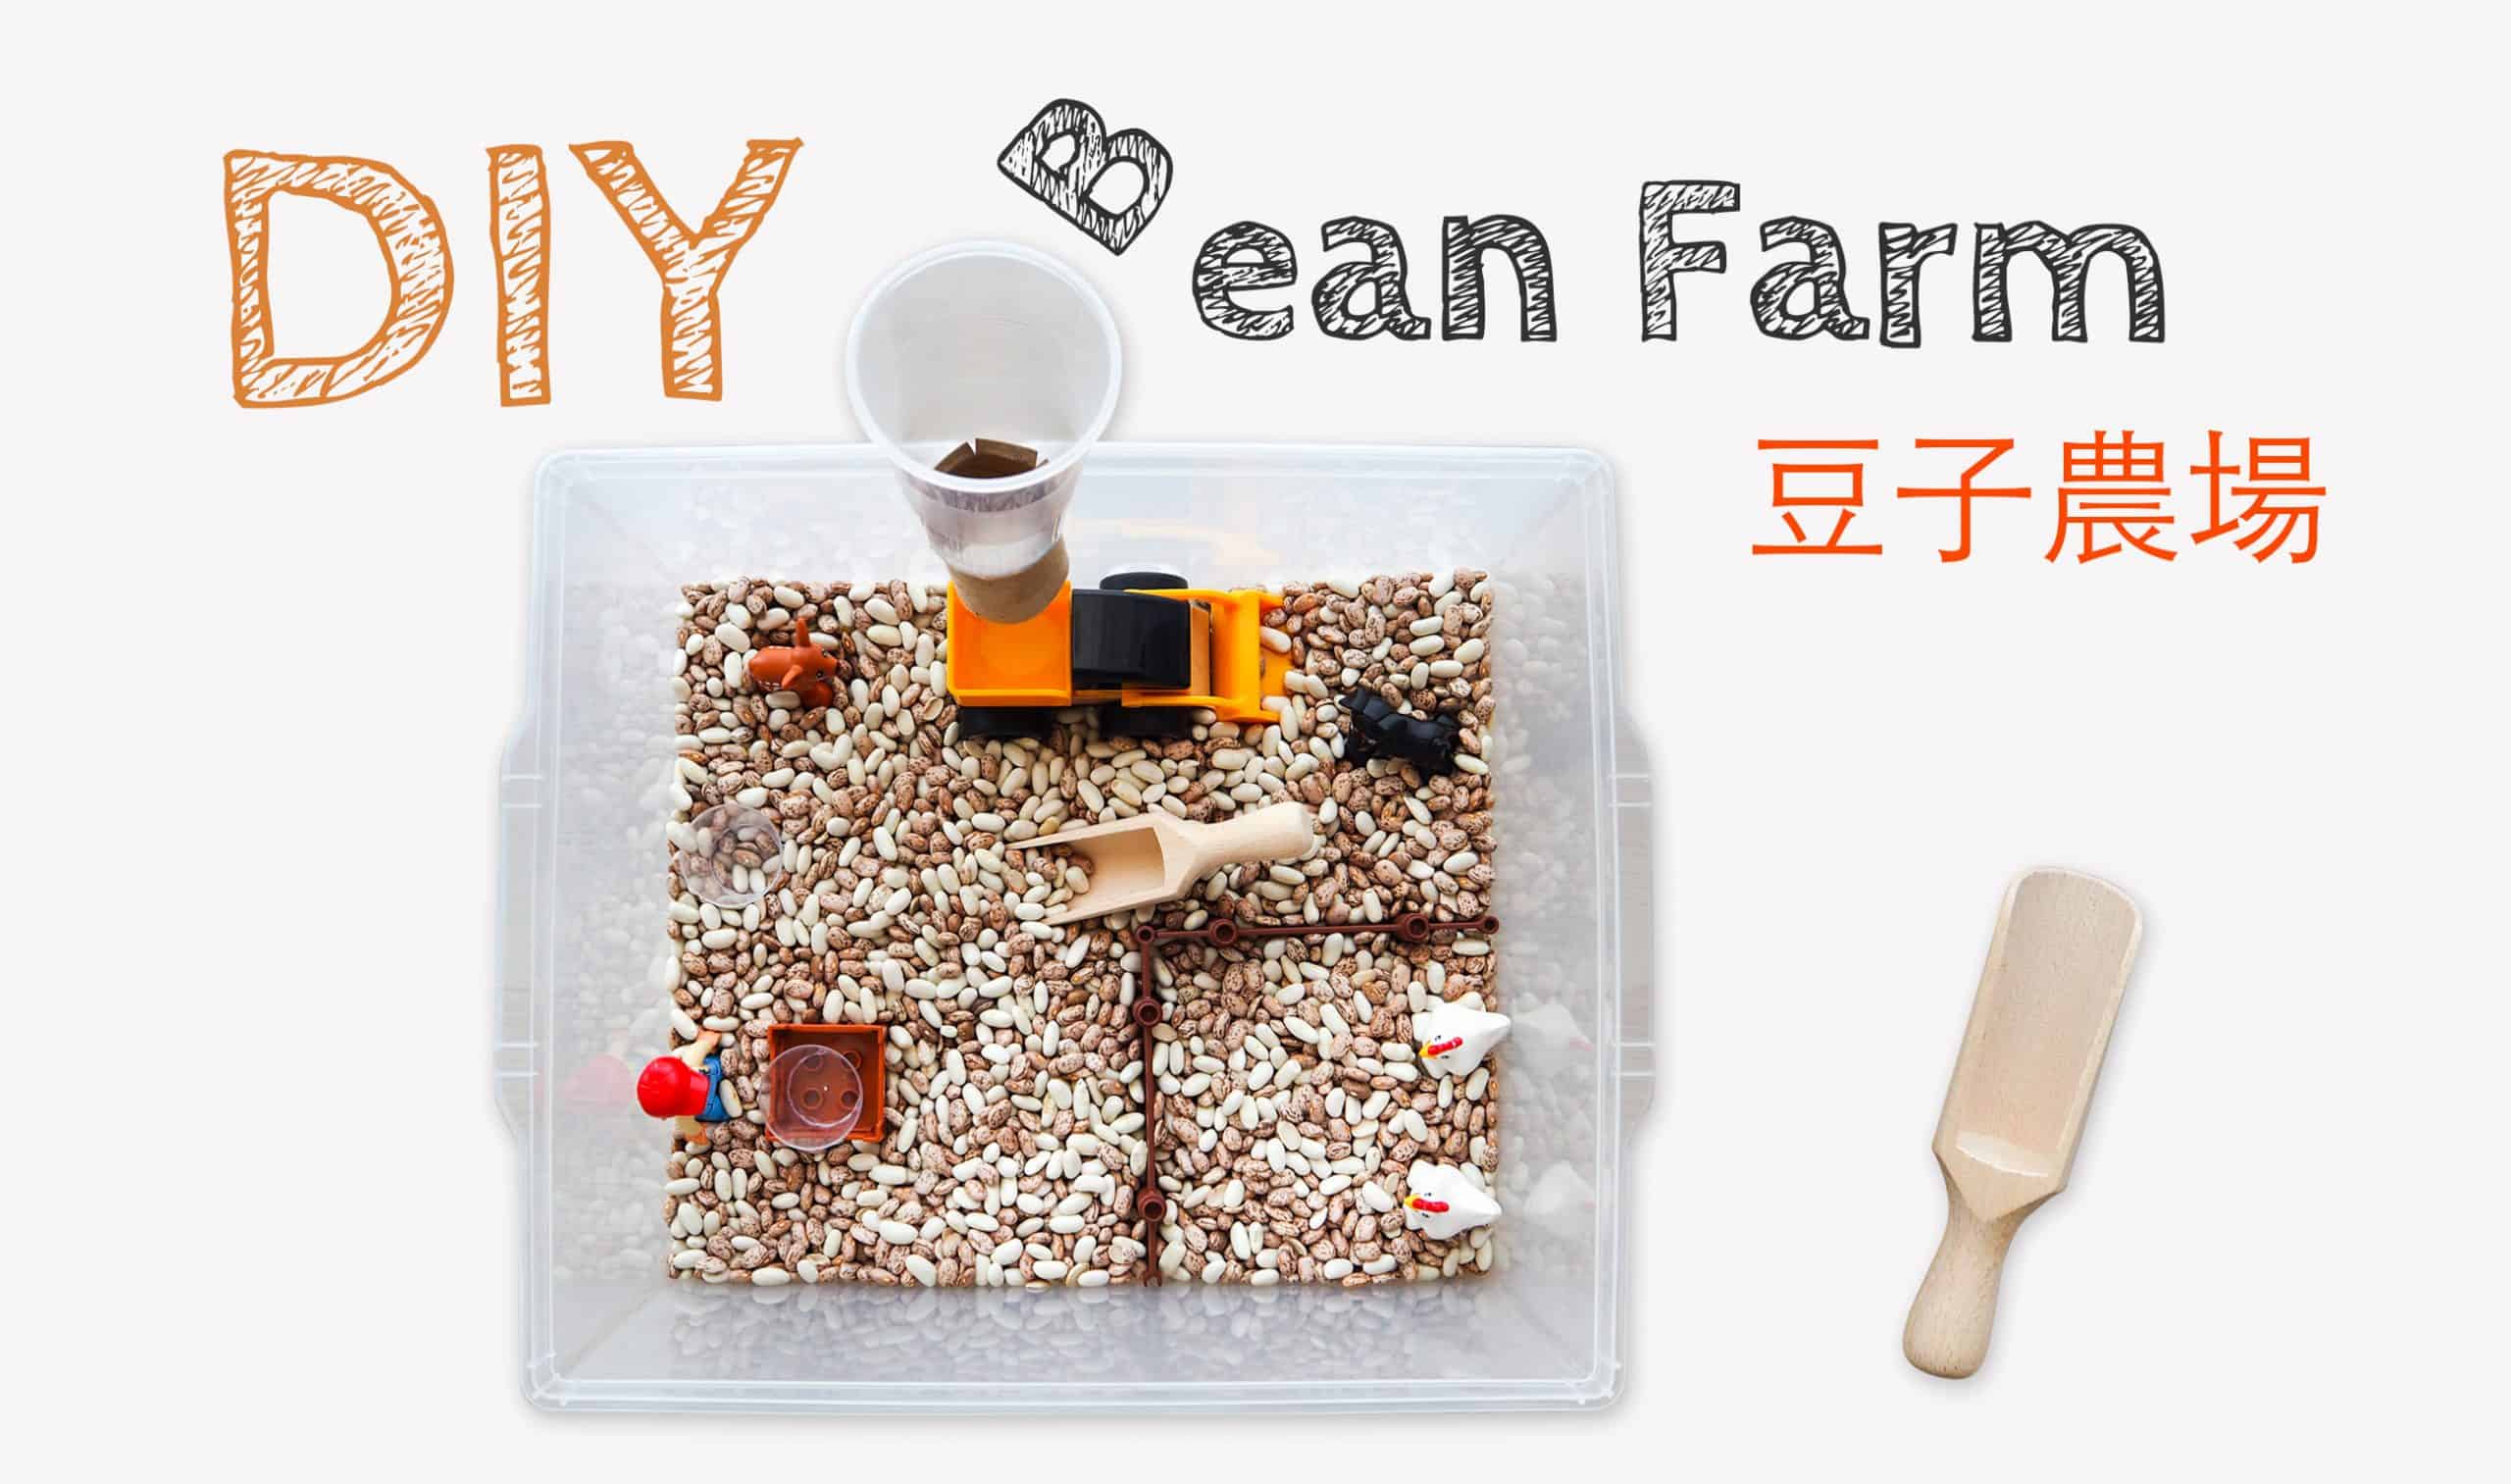 DIY 豆子農場 DIY Bean Farm